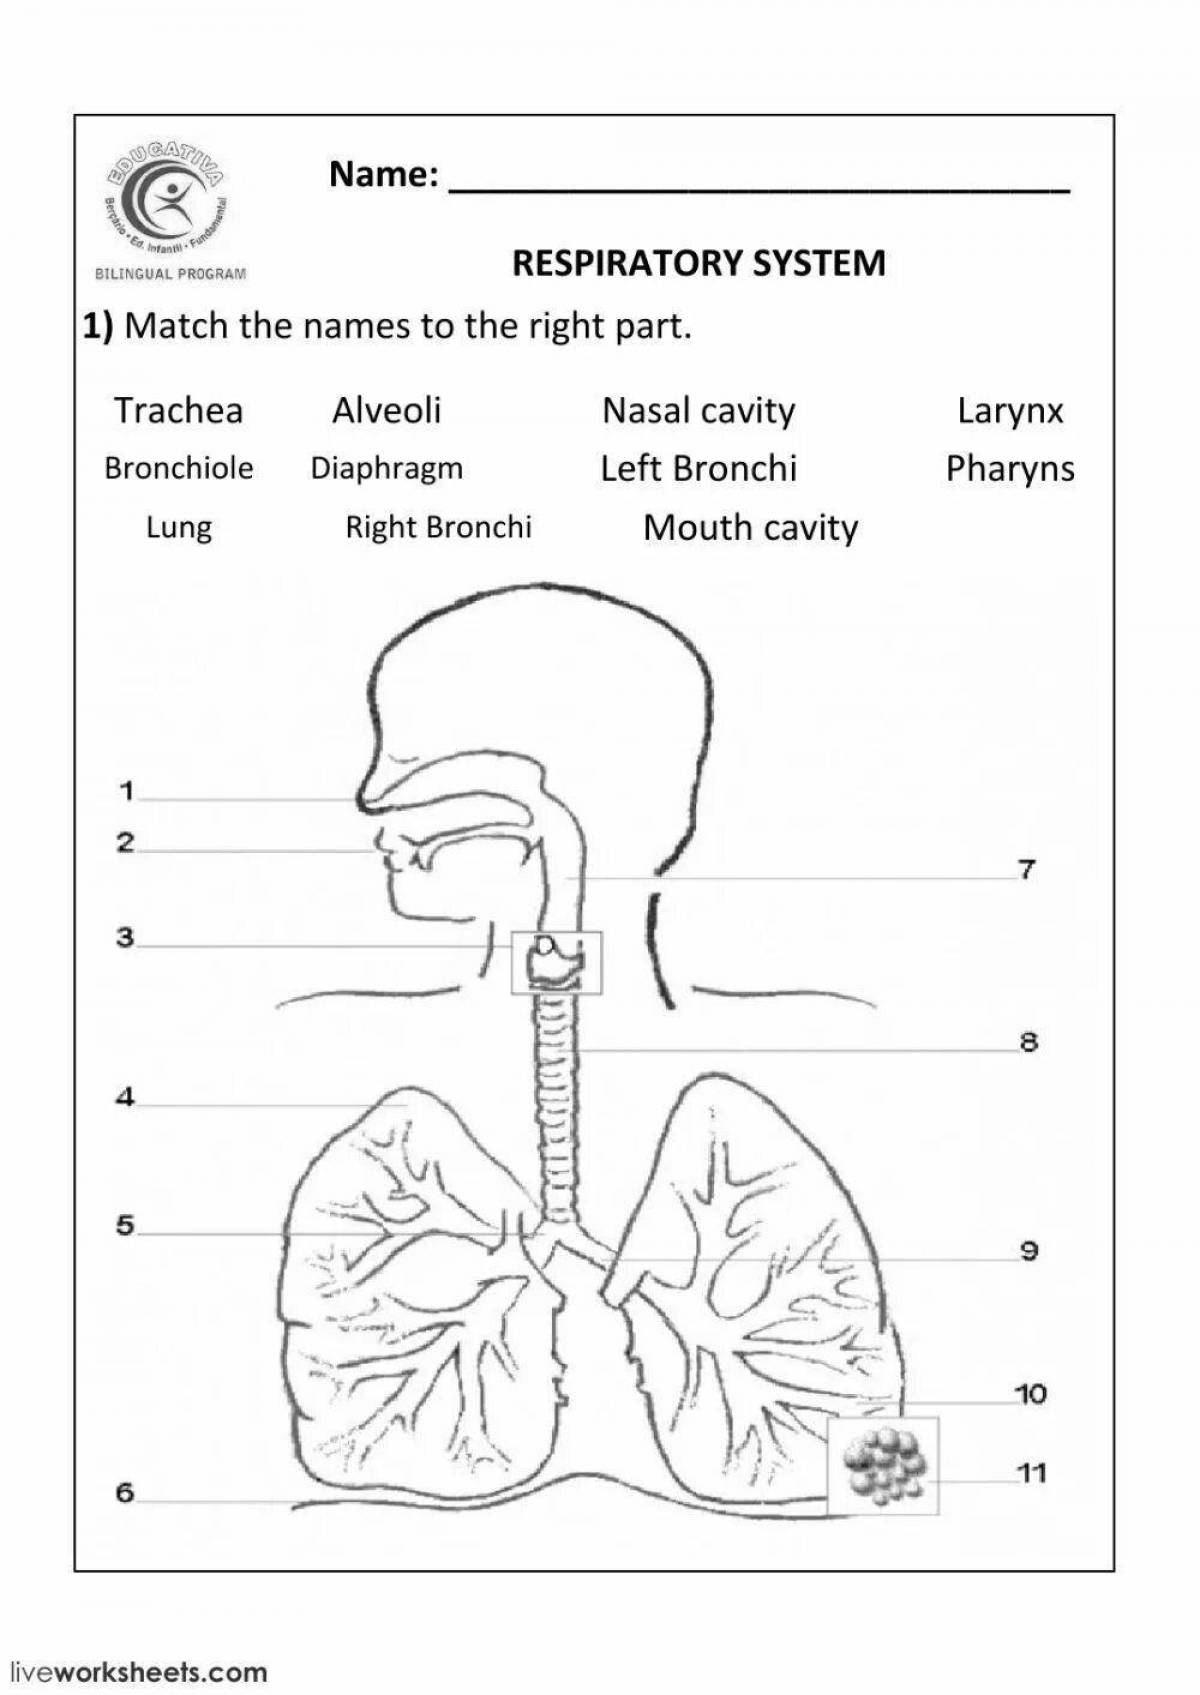 Respiratory system #12